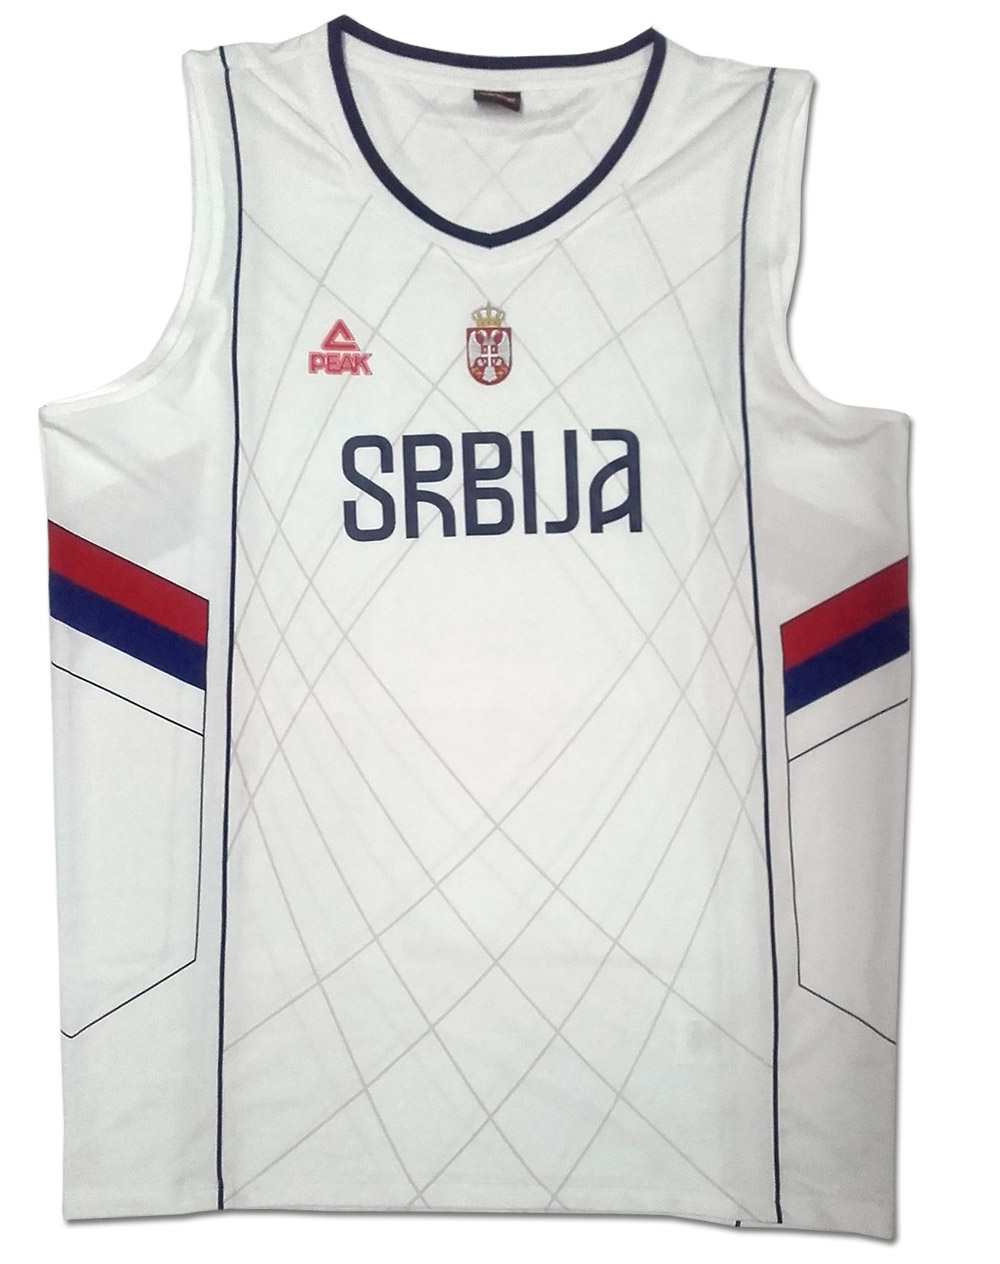 Peak ženski dres košarkaške reprezentacije Srbije - beli